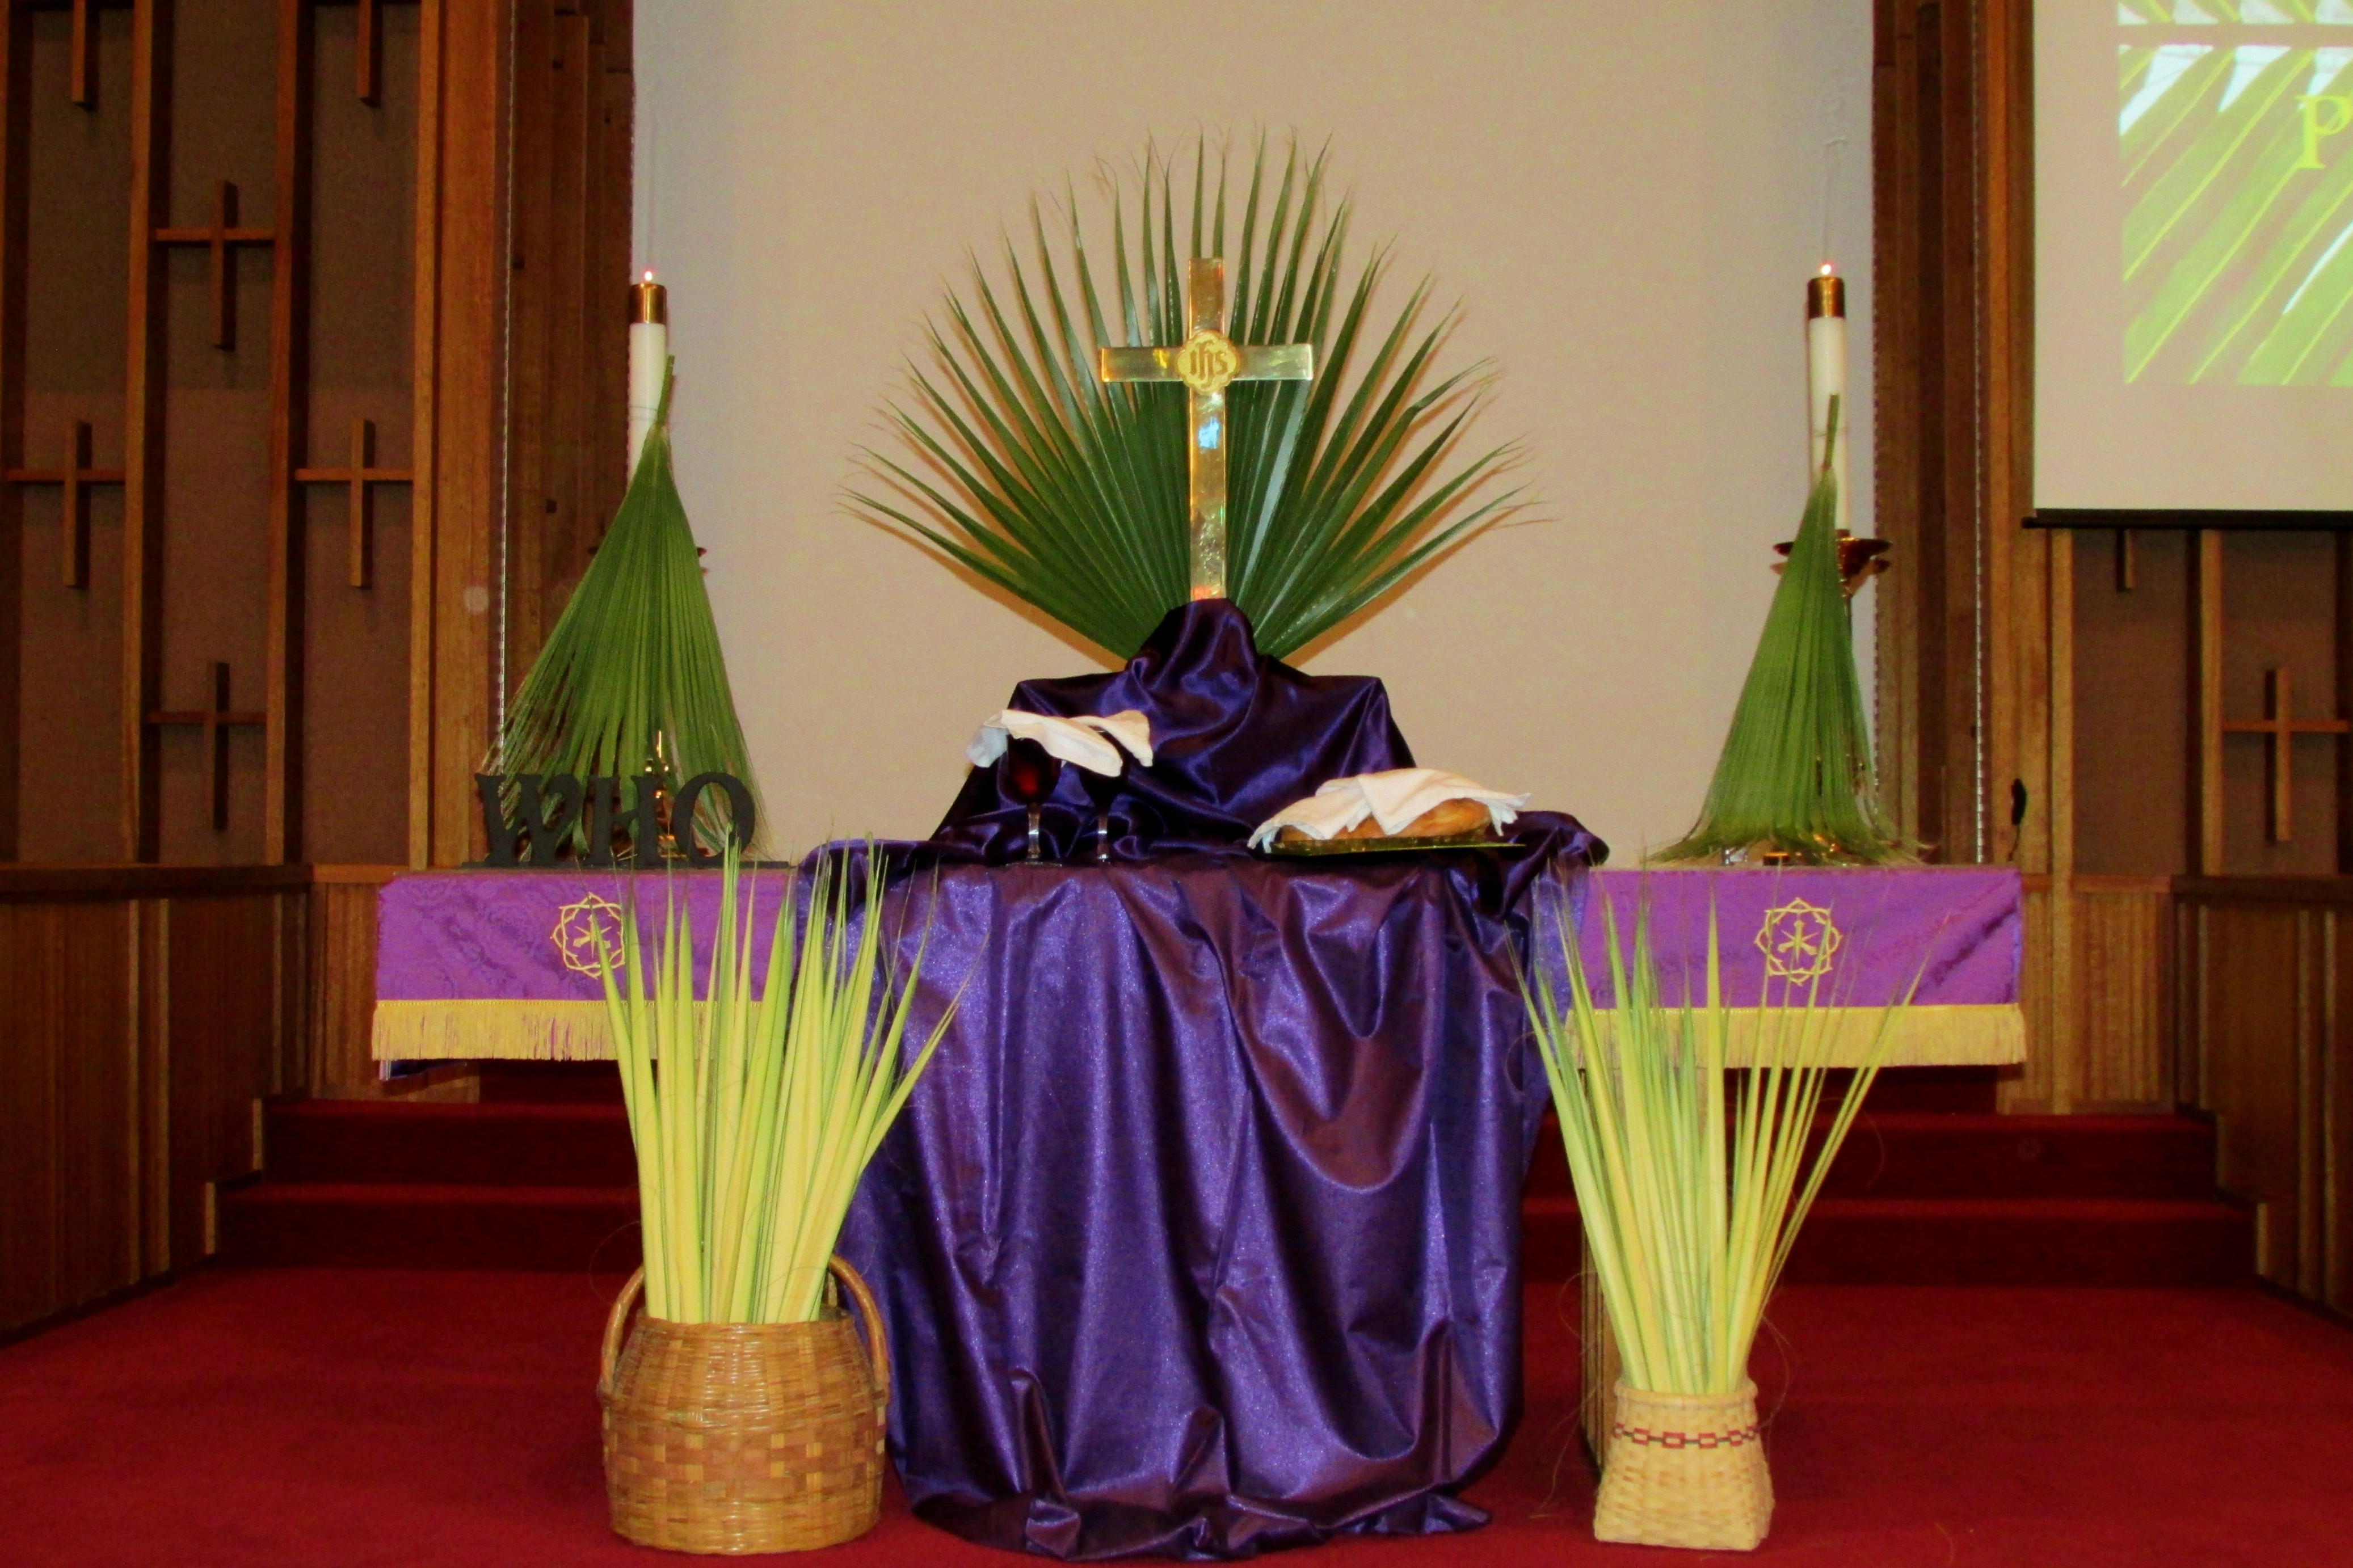 Palm Sunday altar at Morrisville United Methodist Church, April